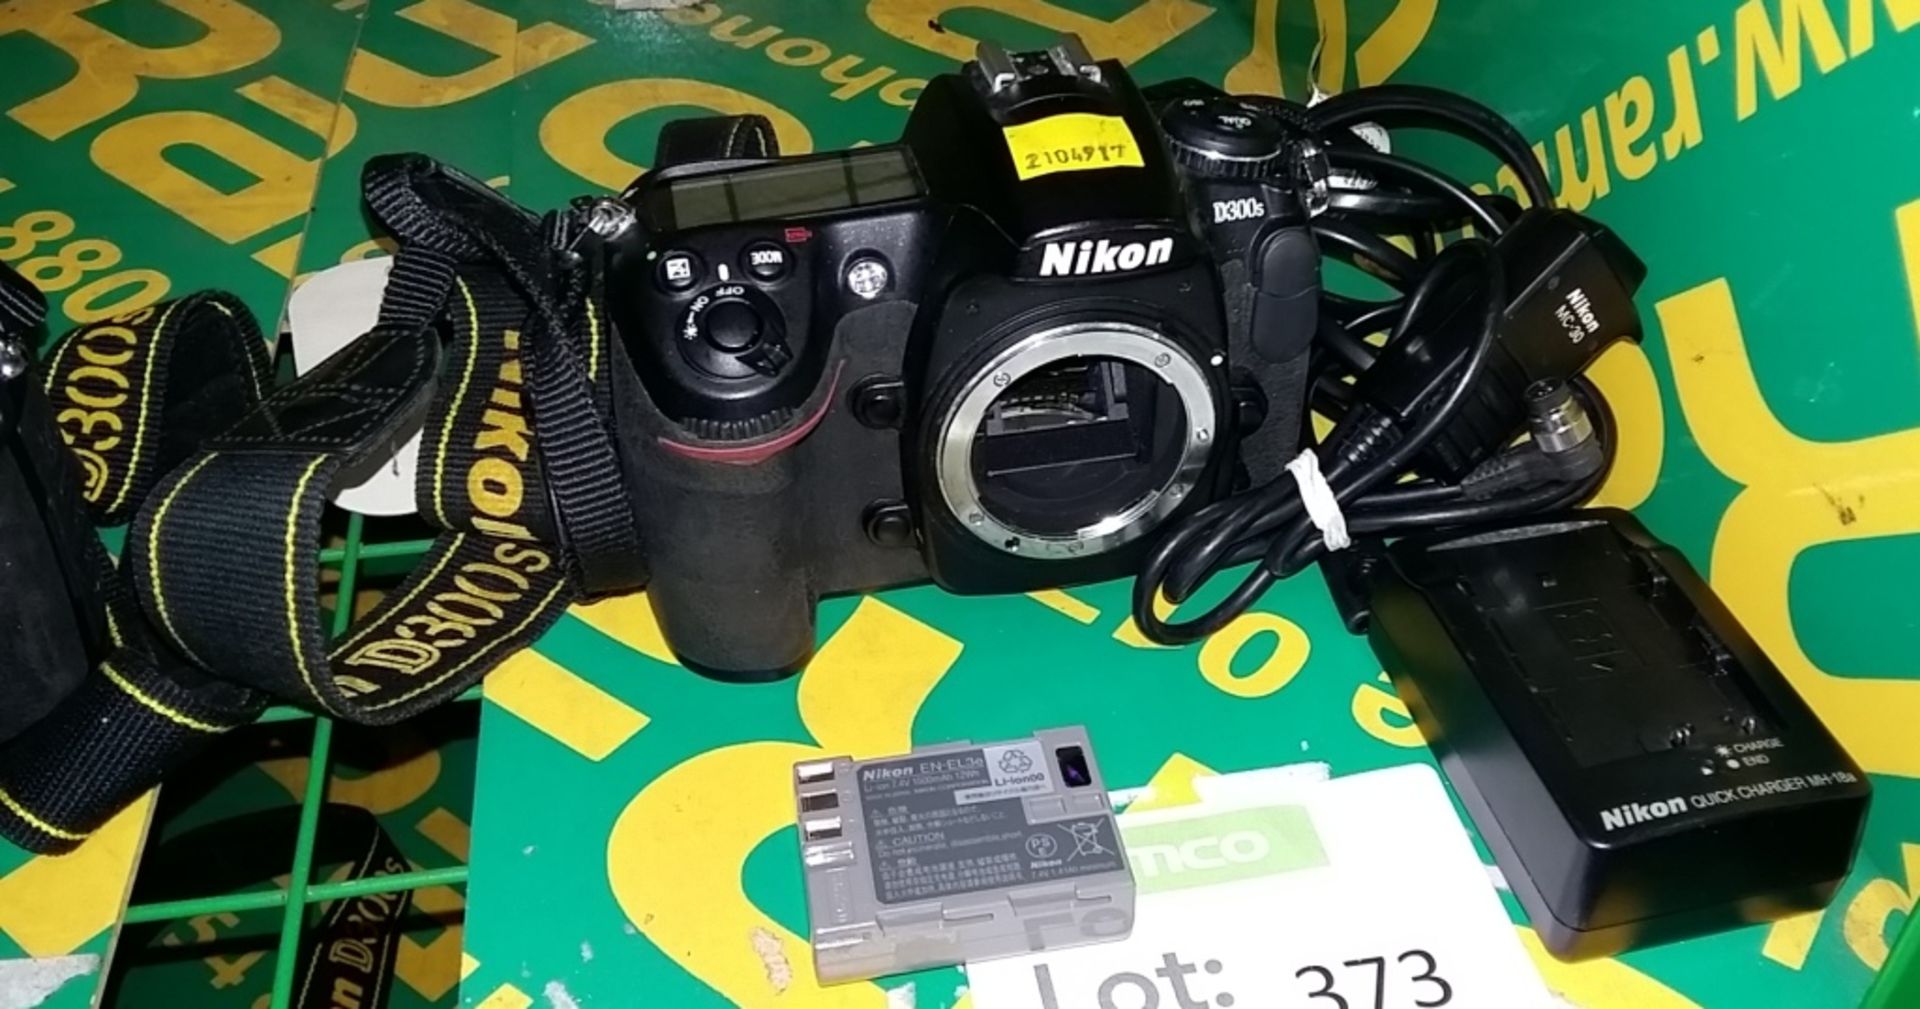 Nikon D3000s camera body, Nikon MH-18a quick charger, NIkon EN-EL3e battery, Nikon MC-30 r